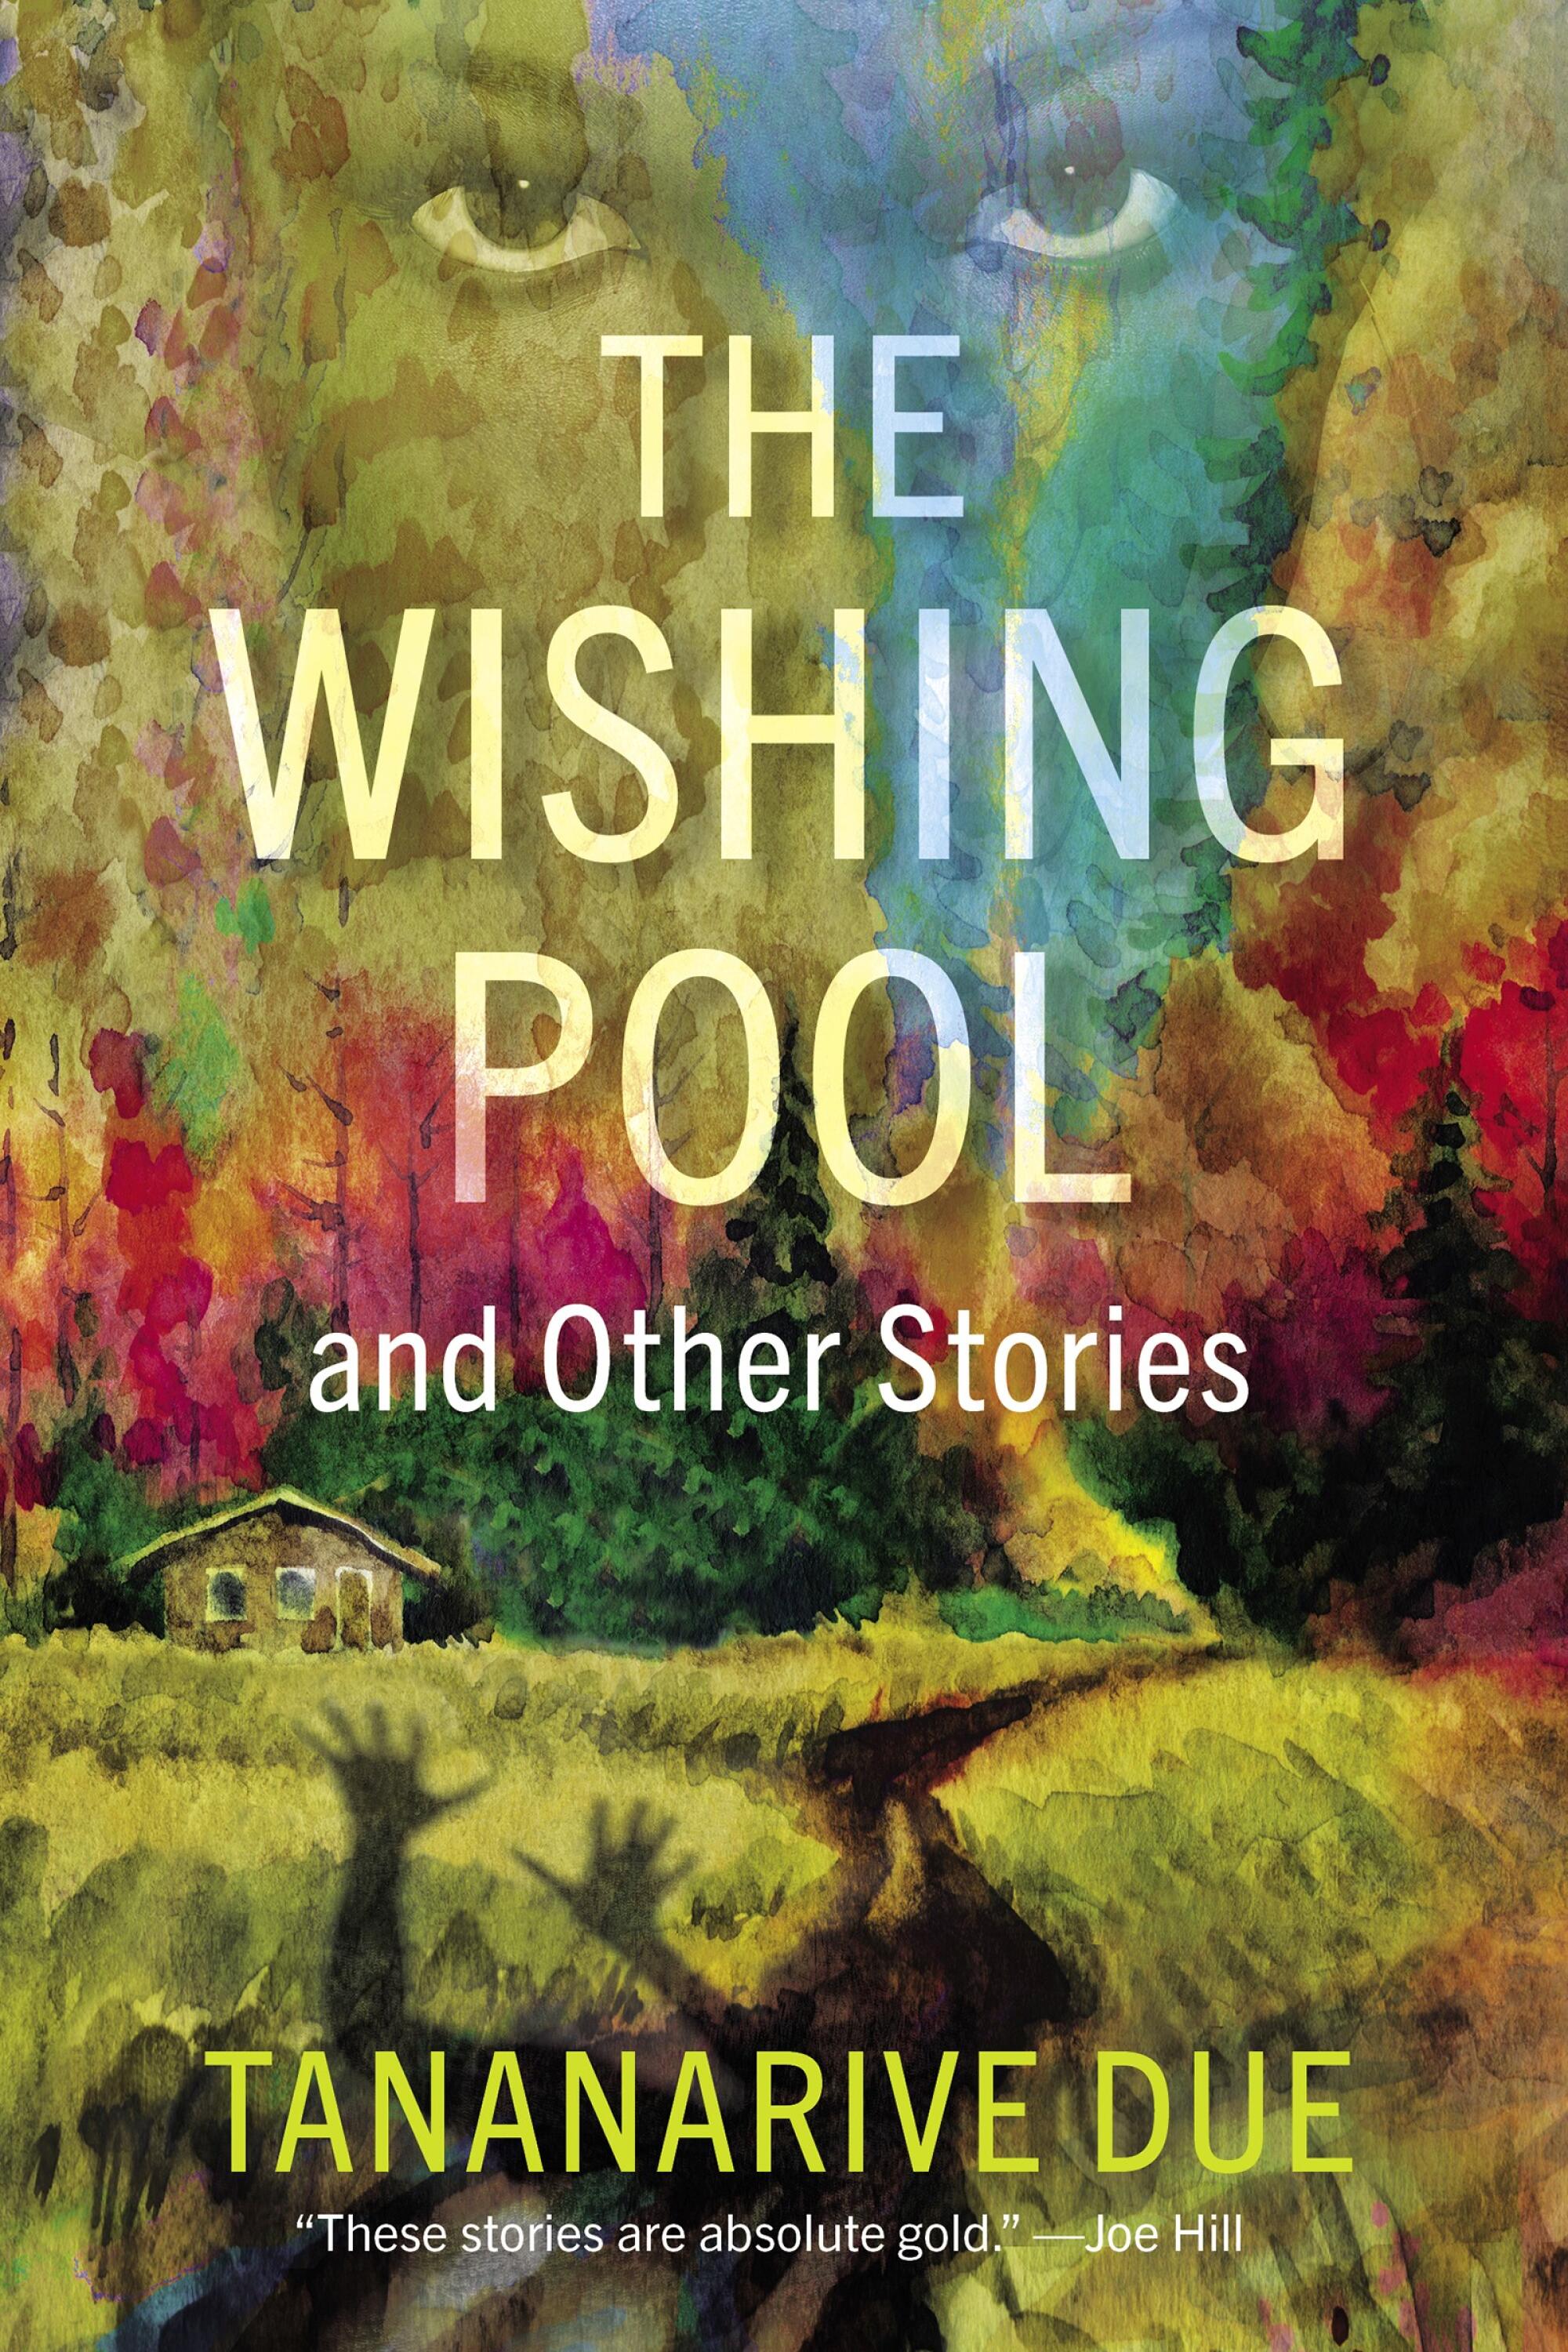 "The Wishing Pool," by Tananarive Due